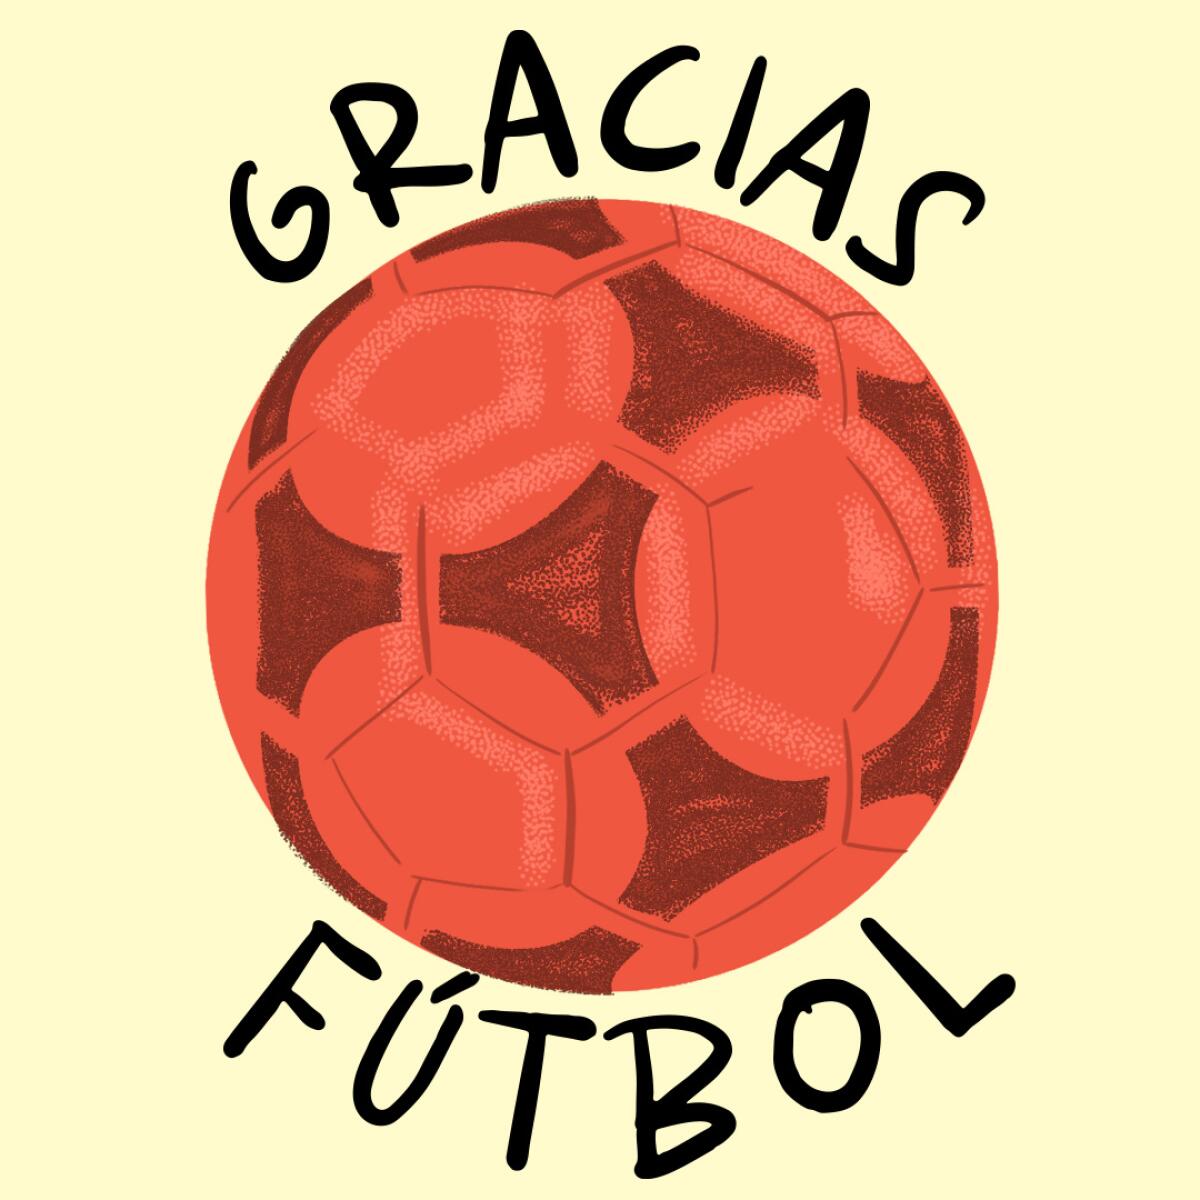 Soccer ball with words "gracias futbol" around it 